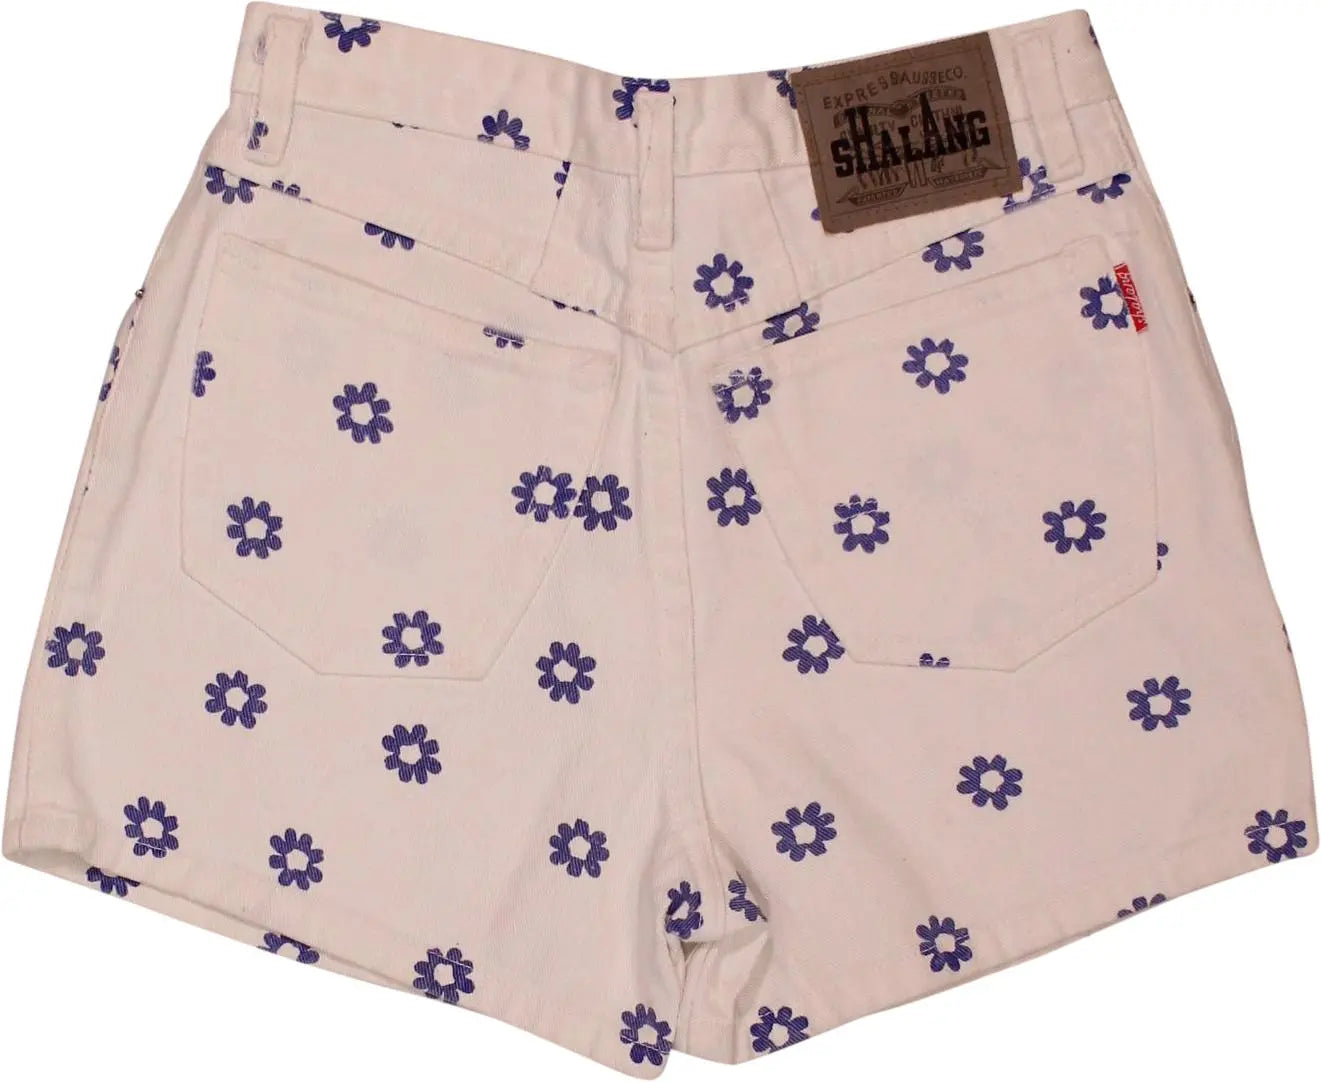 Shalang - Floral Denim Shorts- ThriftTale.com - Vintage and second handclothing